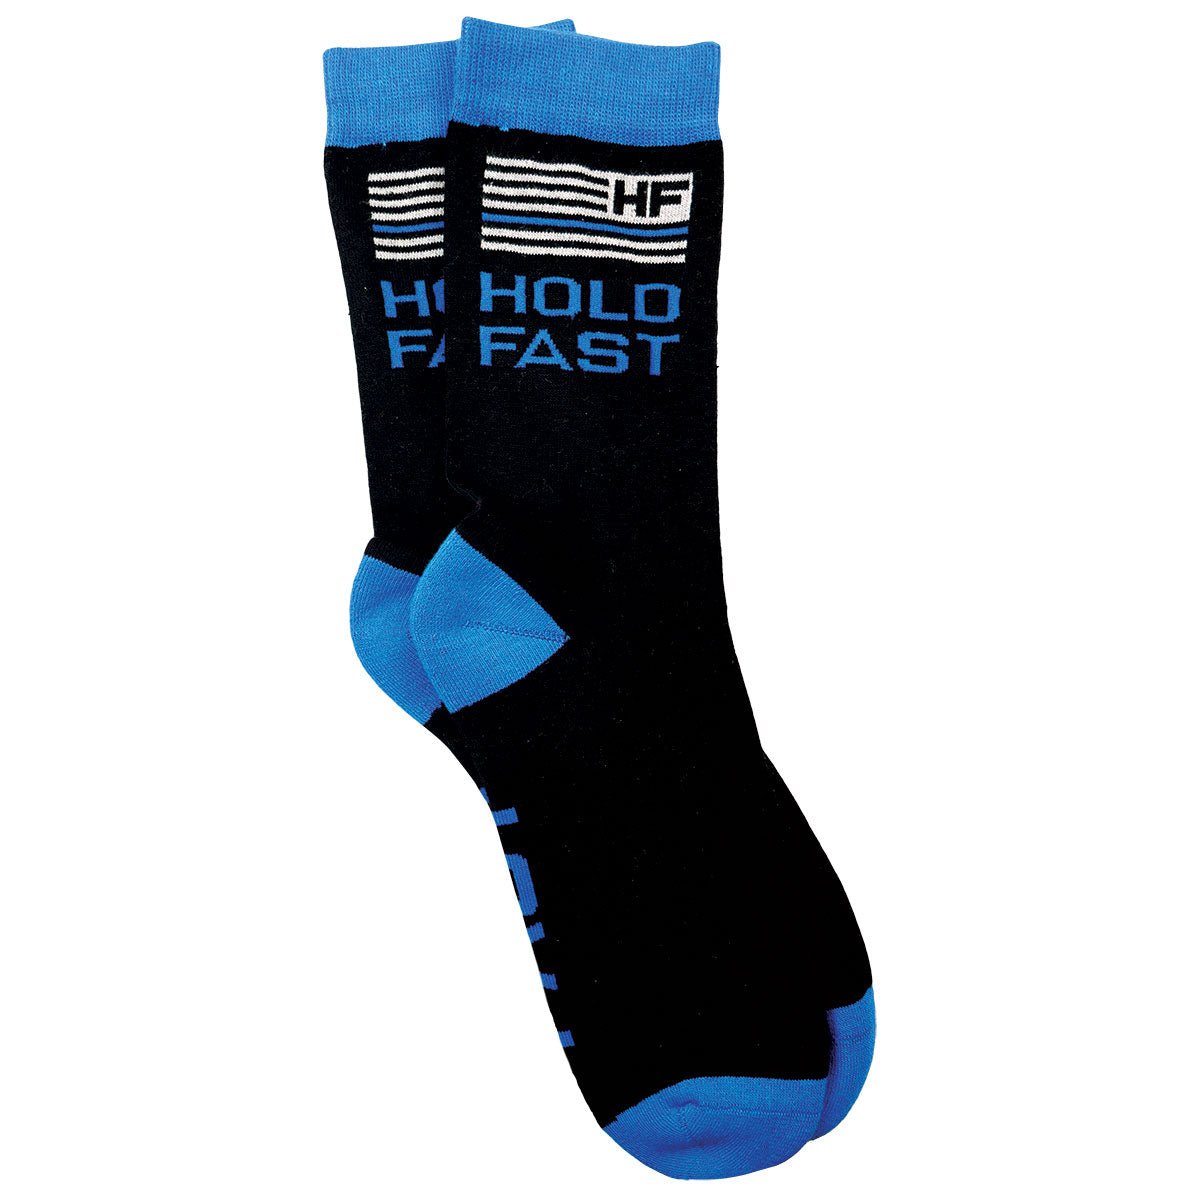 Police Flag Socks – We Hold Fast